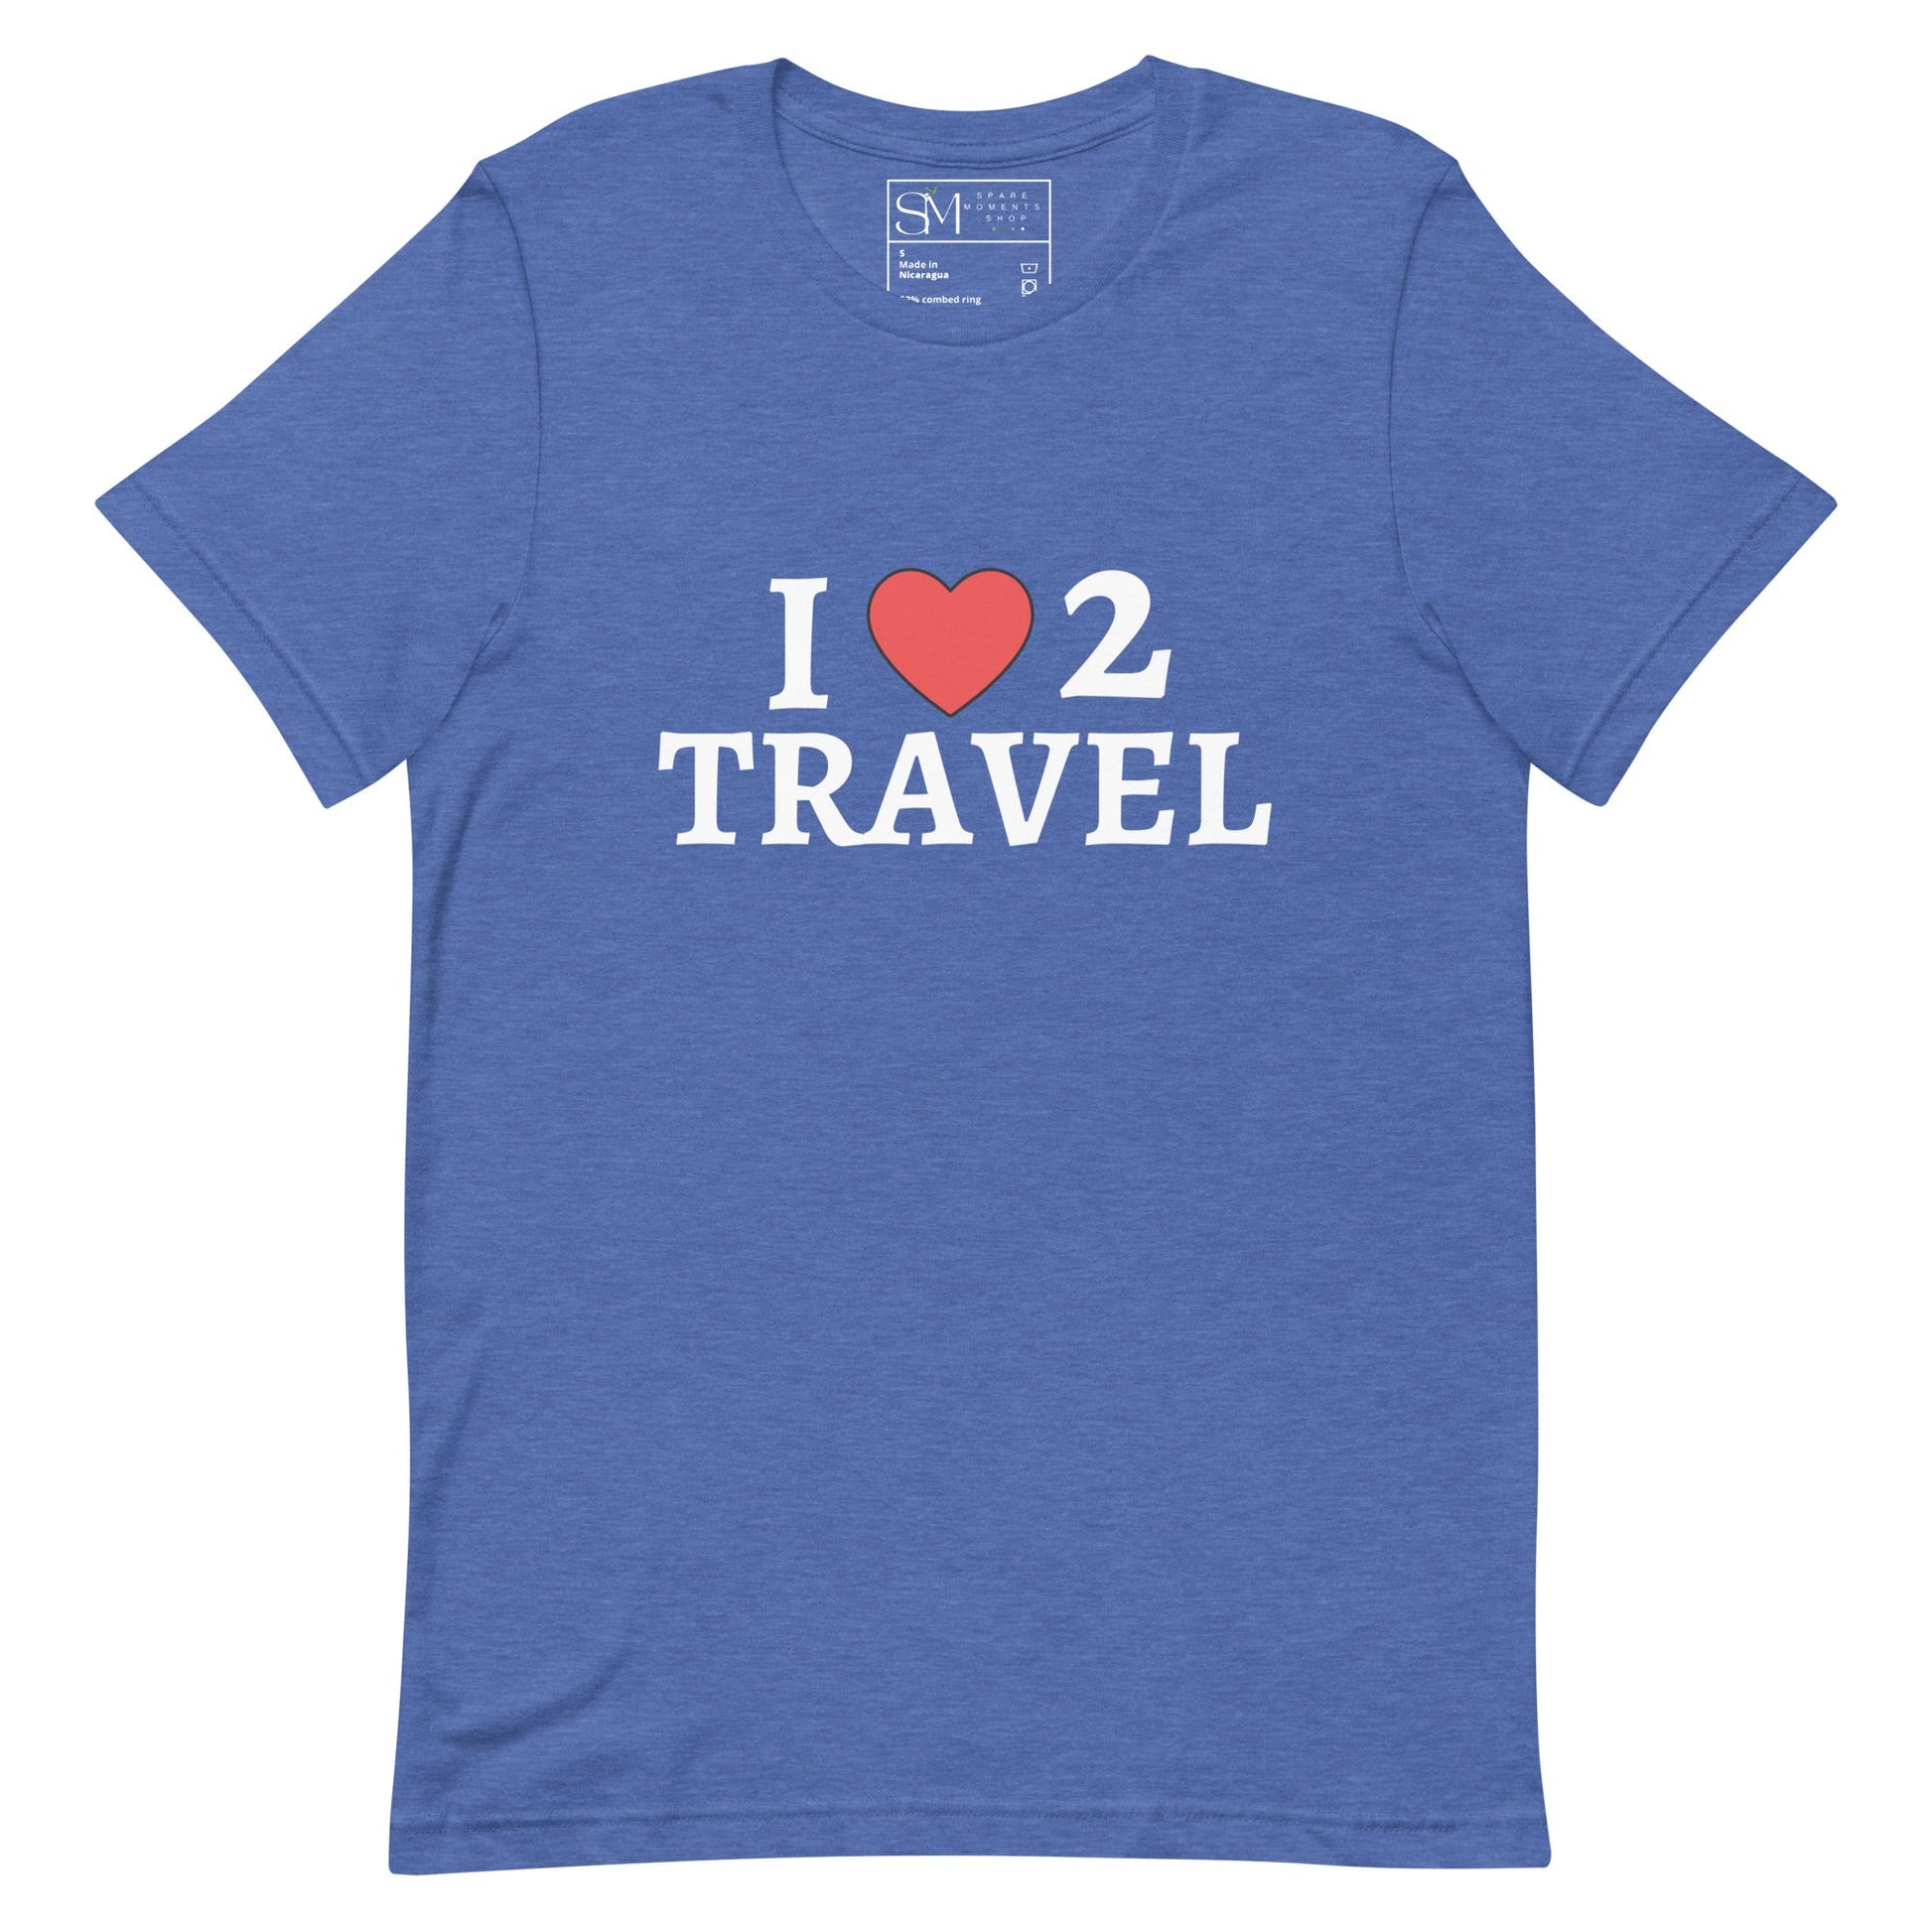 Fun Travel Graphic Tees | Unisex Vacation Shirts